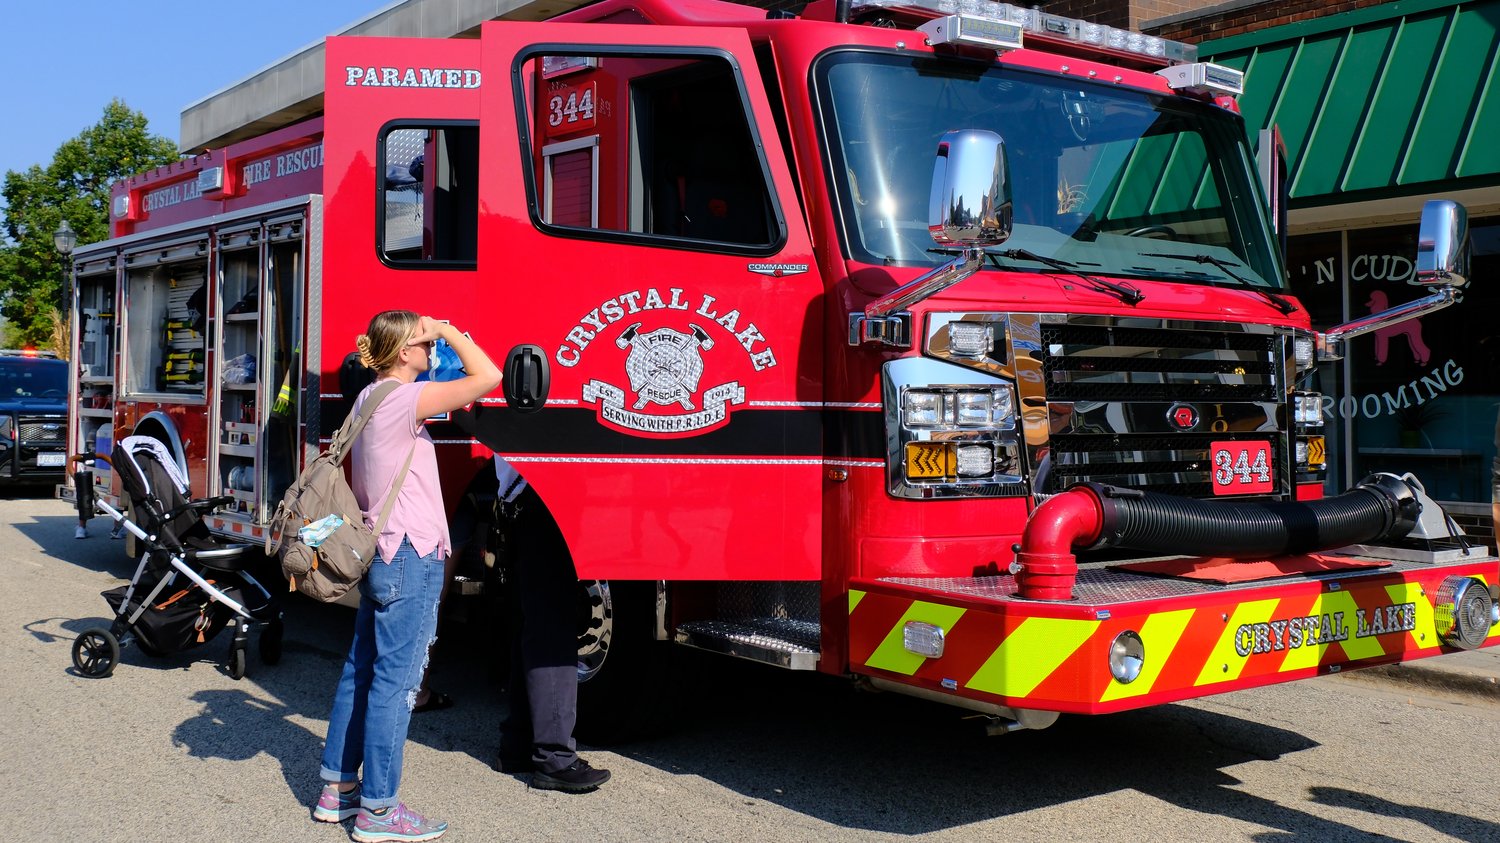 Crystal Lake Fire engine on display.